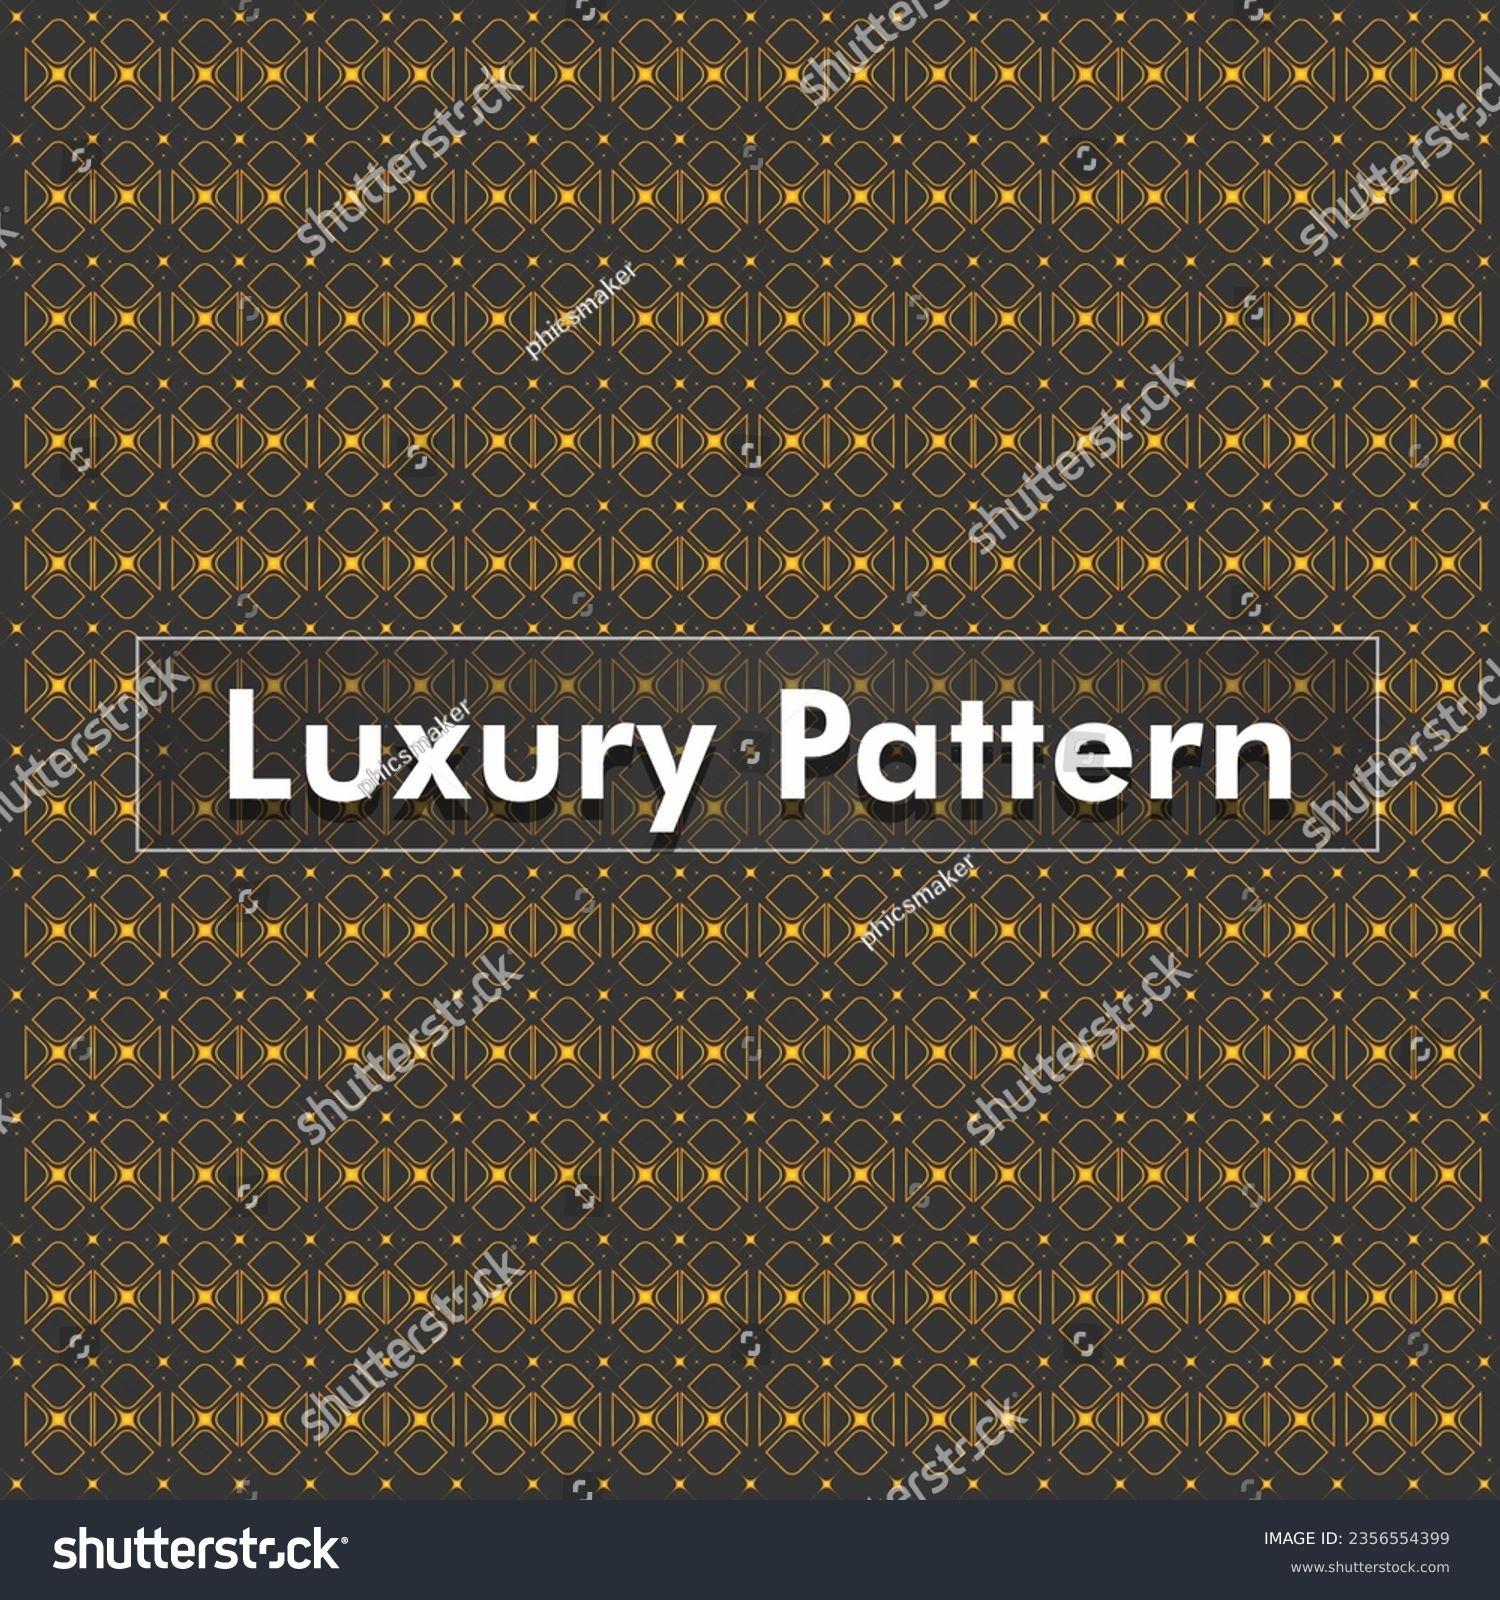 A Luxurious Seamless Pattern. Luxury Pattern Template. #2356554399